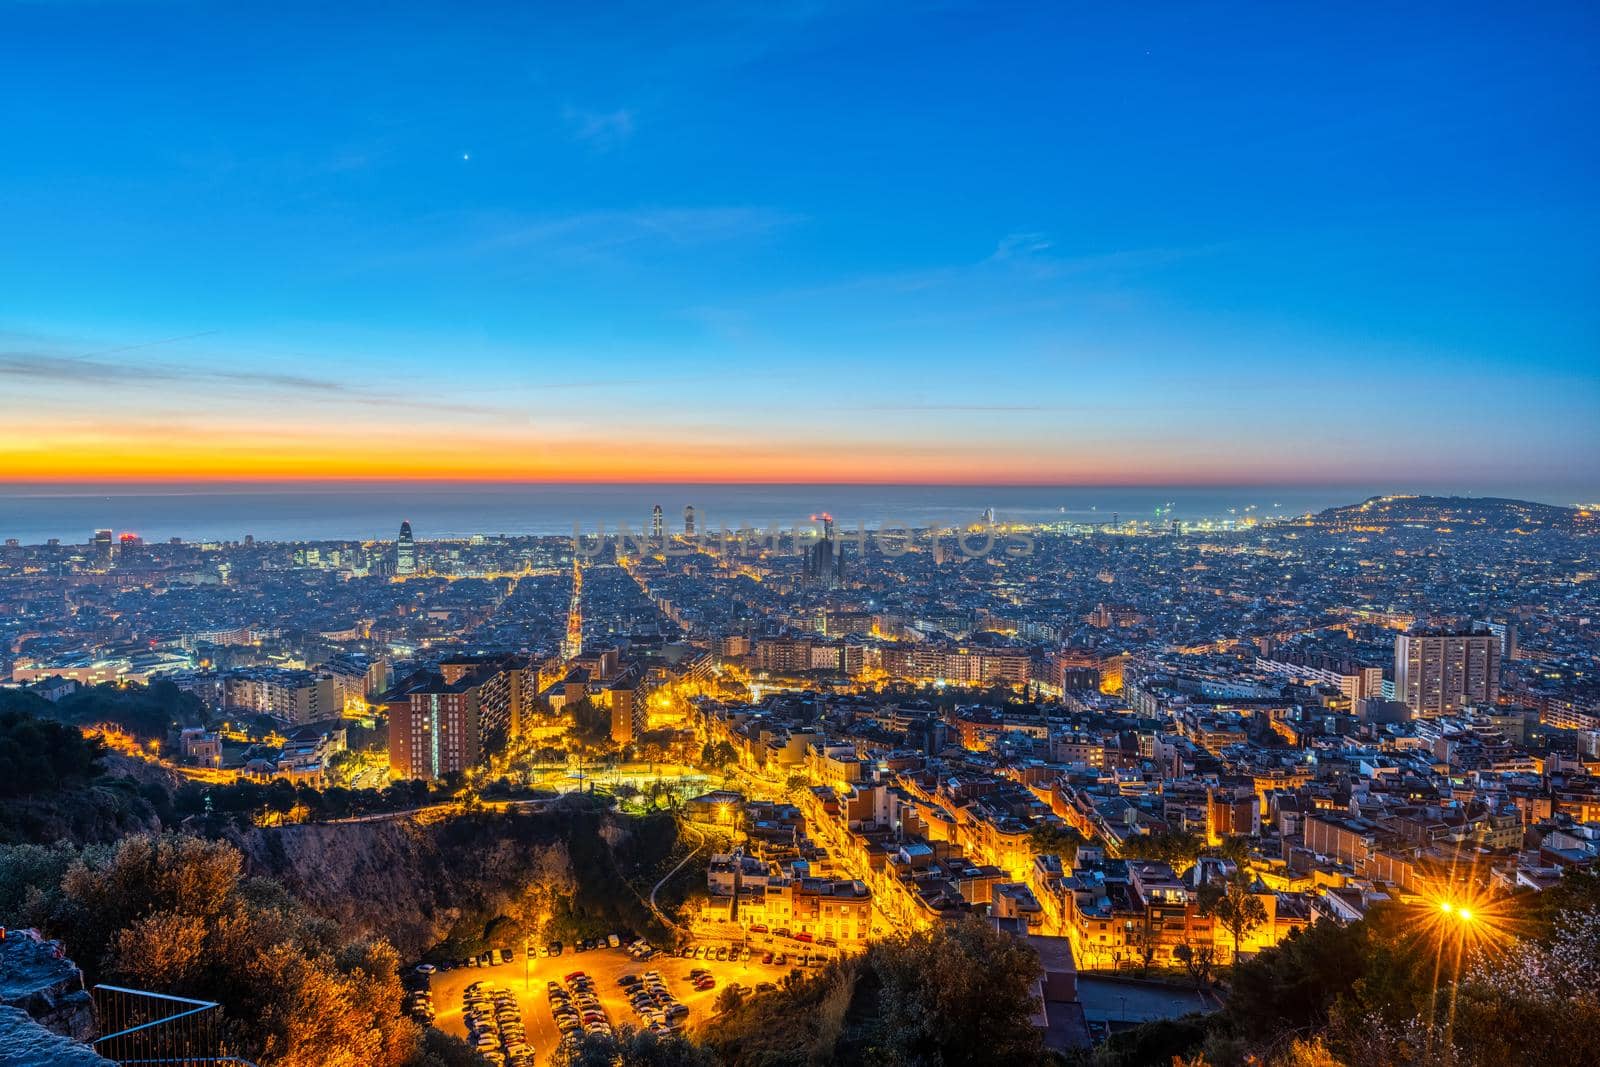 The skyline of Barcelona before sunrise by elxeneize